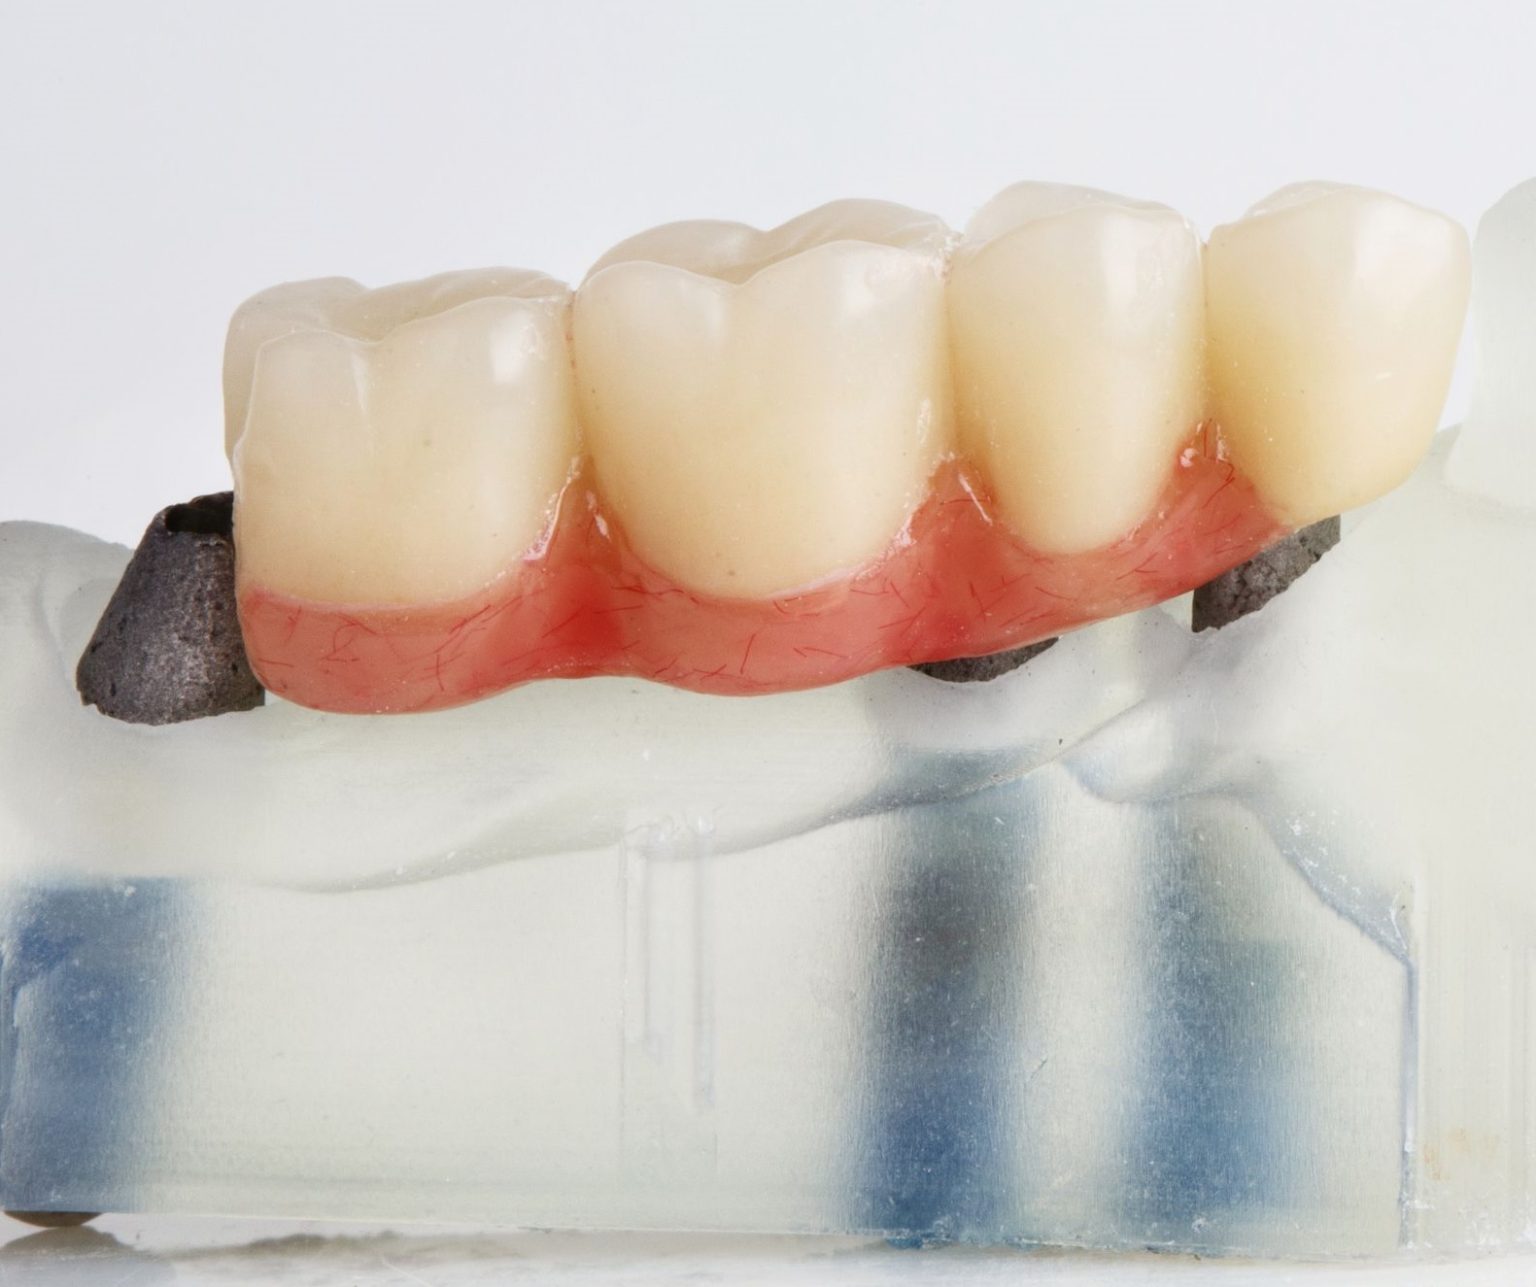 dental implant alternatives featured